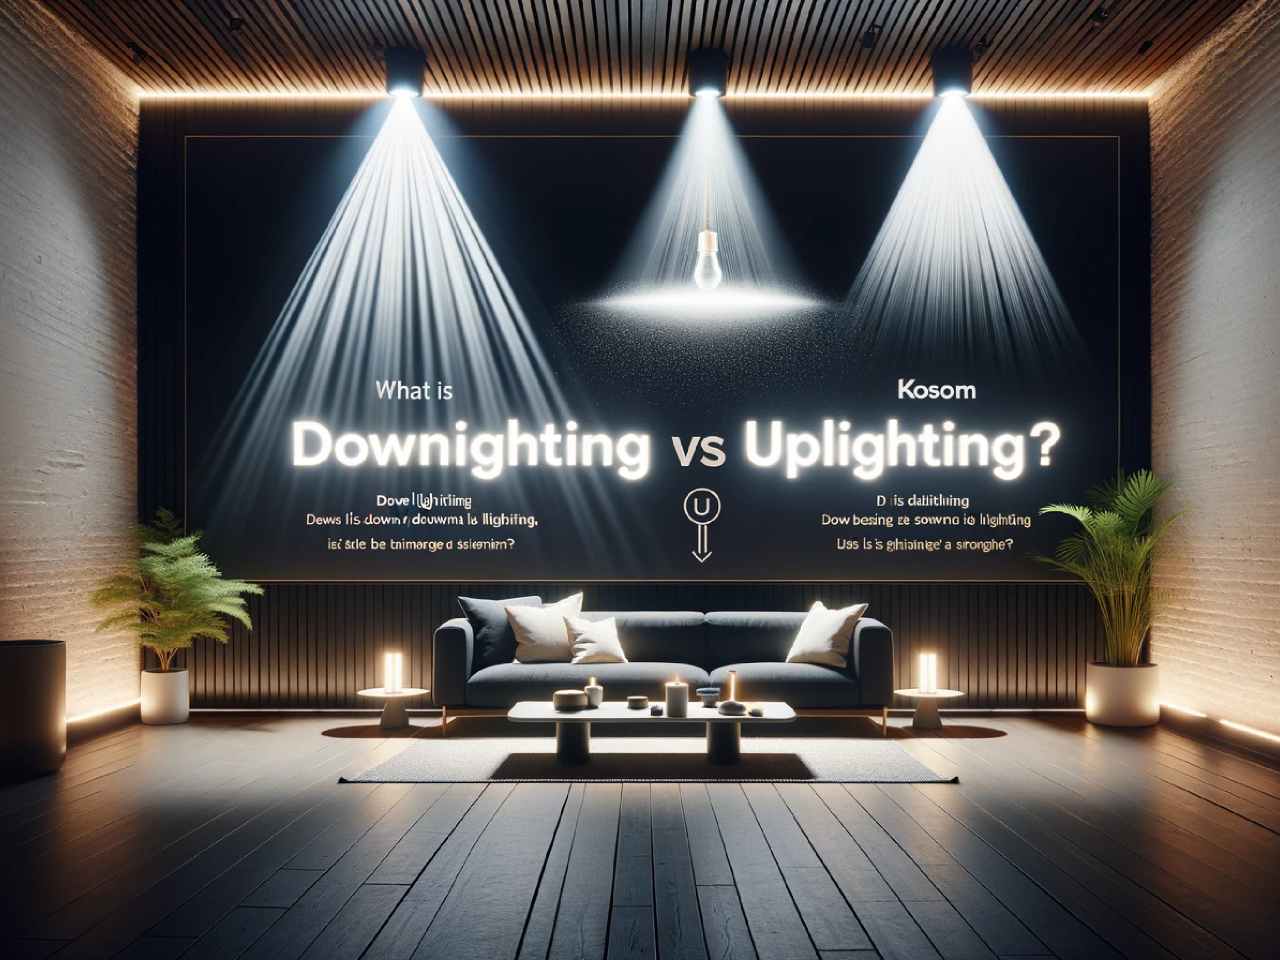 What is downlighting vs uplighting